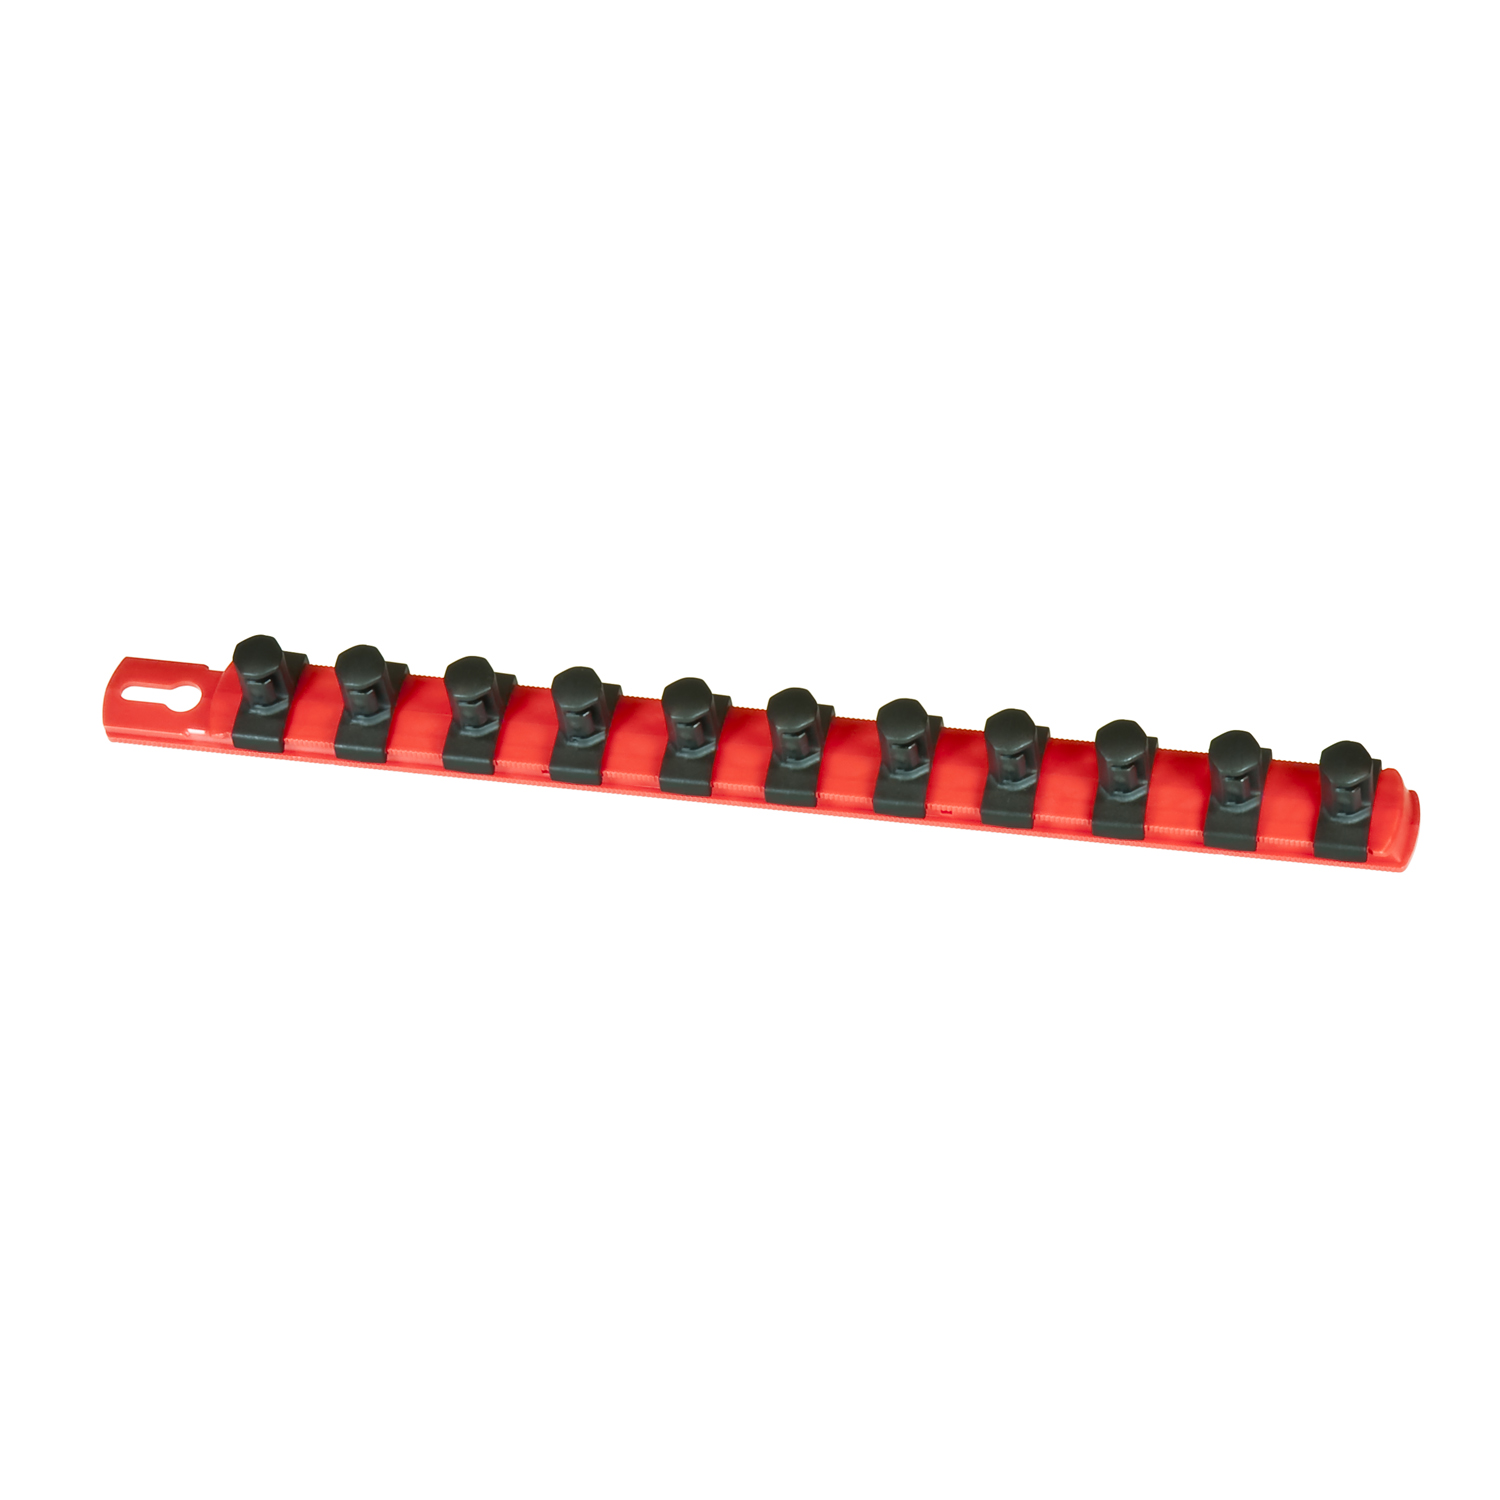 Ernst Manufacturing 13-Inch Socket Organizer with 11 1/2-Inch Twist Lock Clips Red 